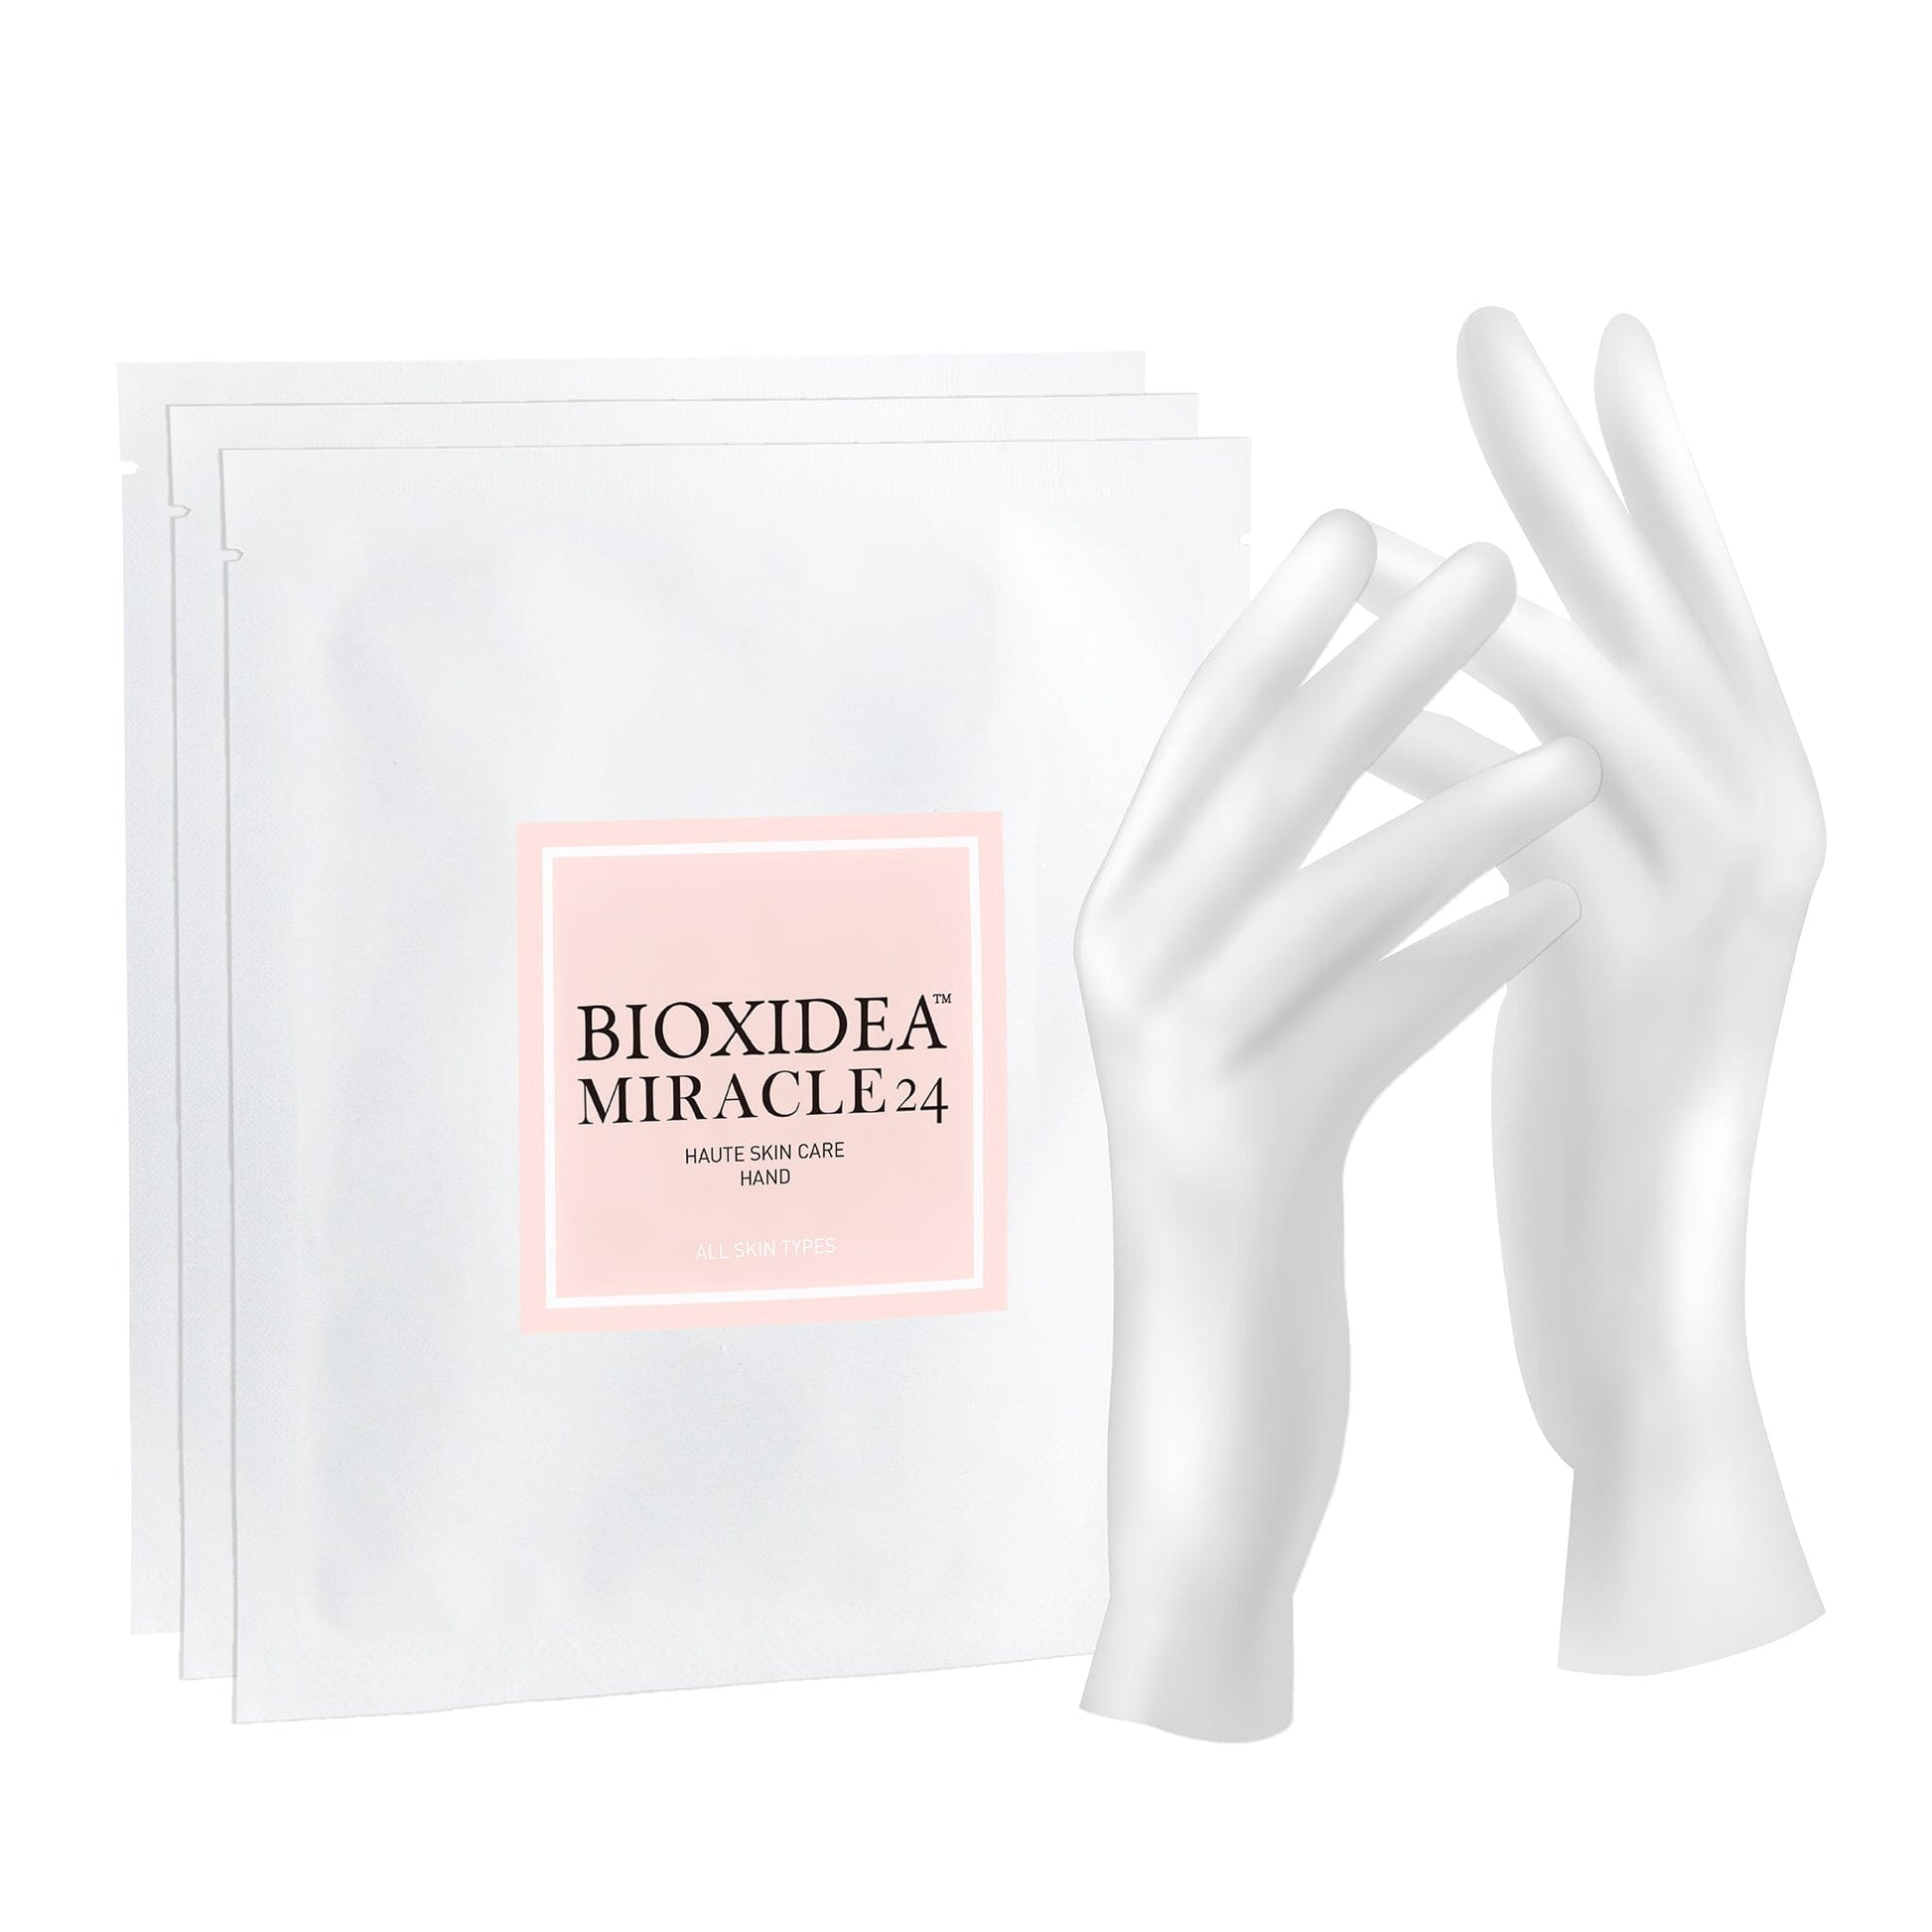 BIOXIDEA Miracle24 Hand Mask Mask